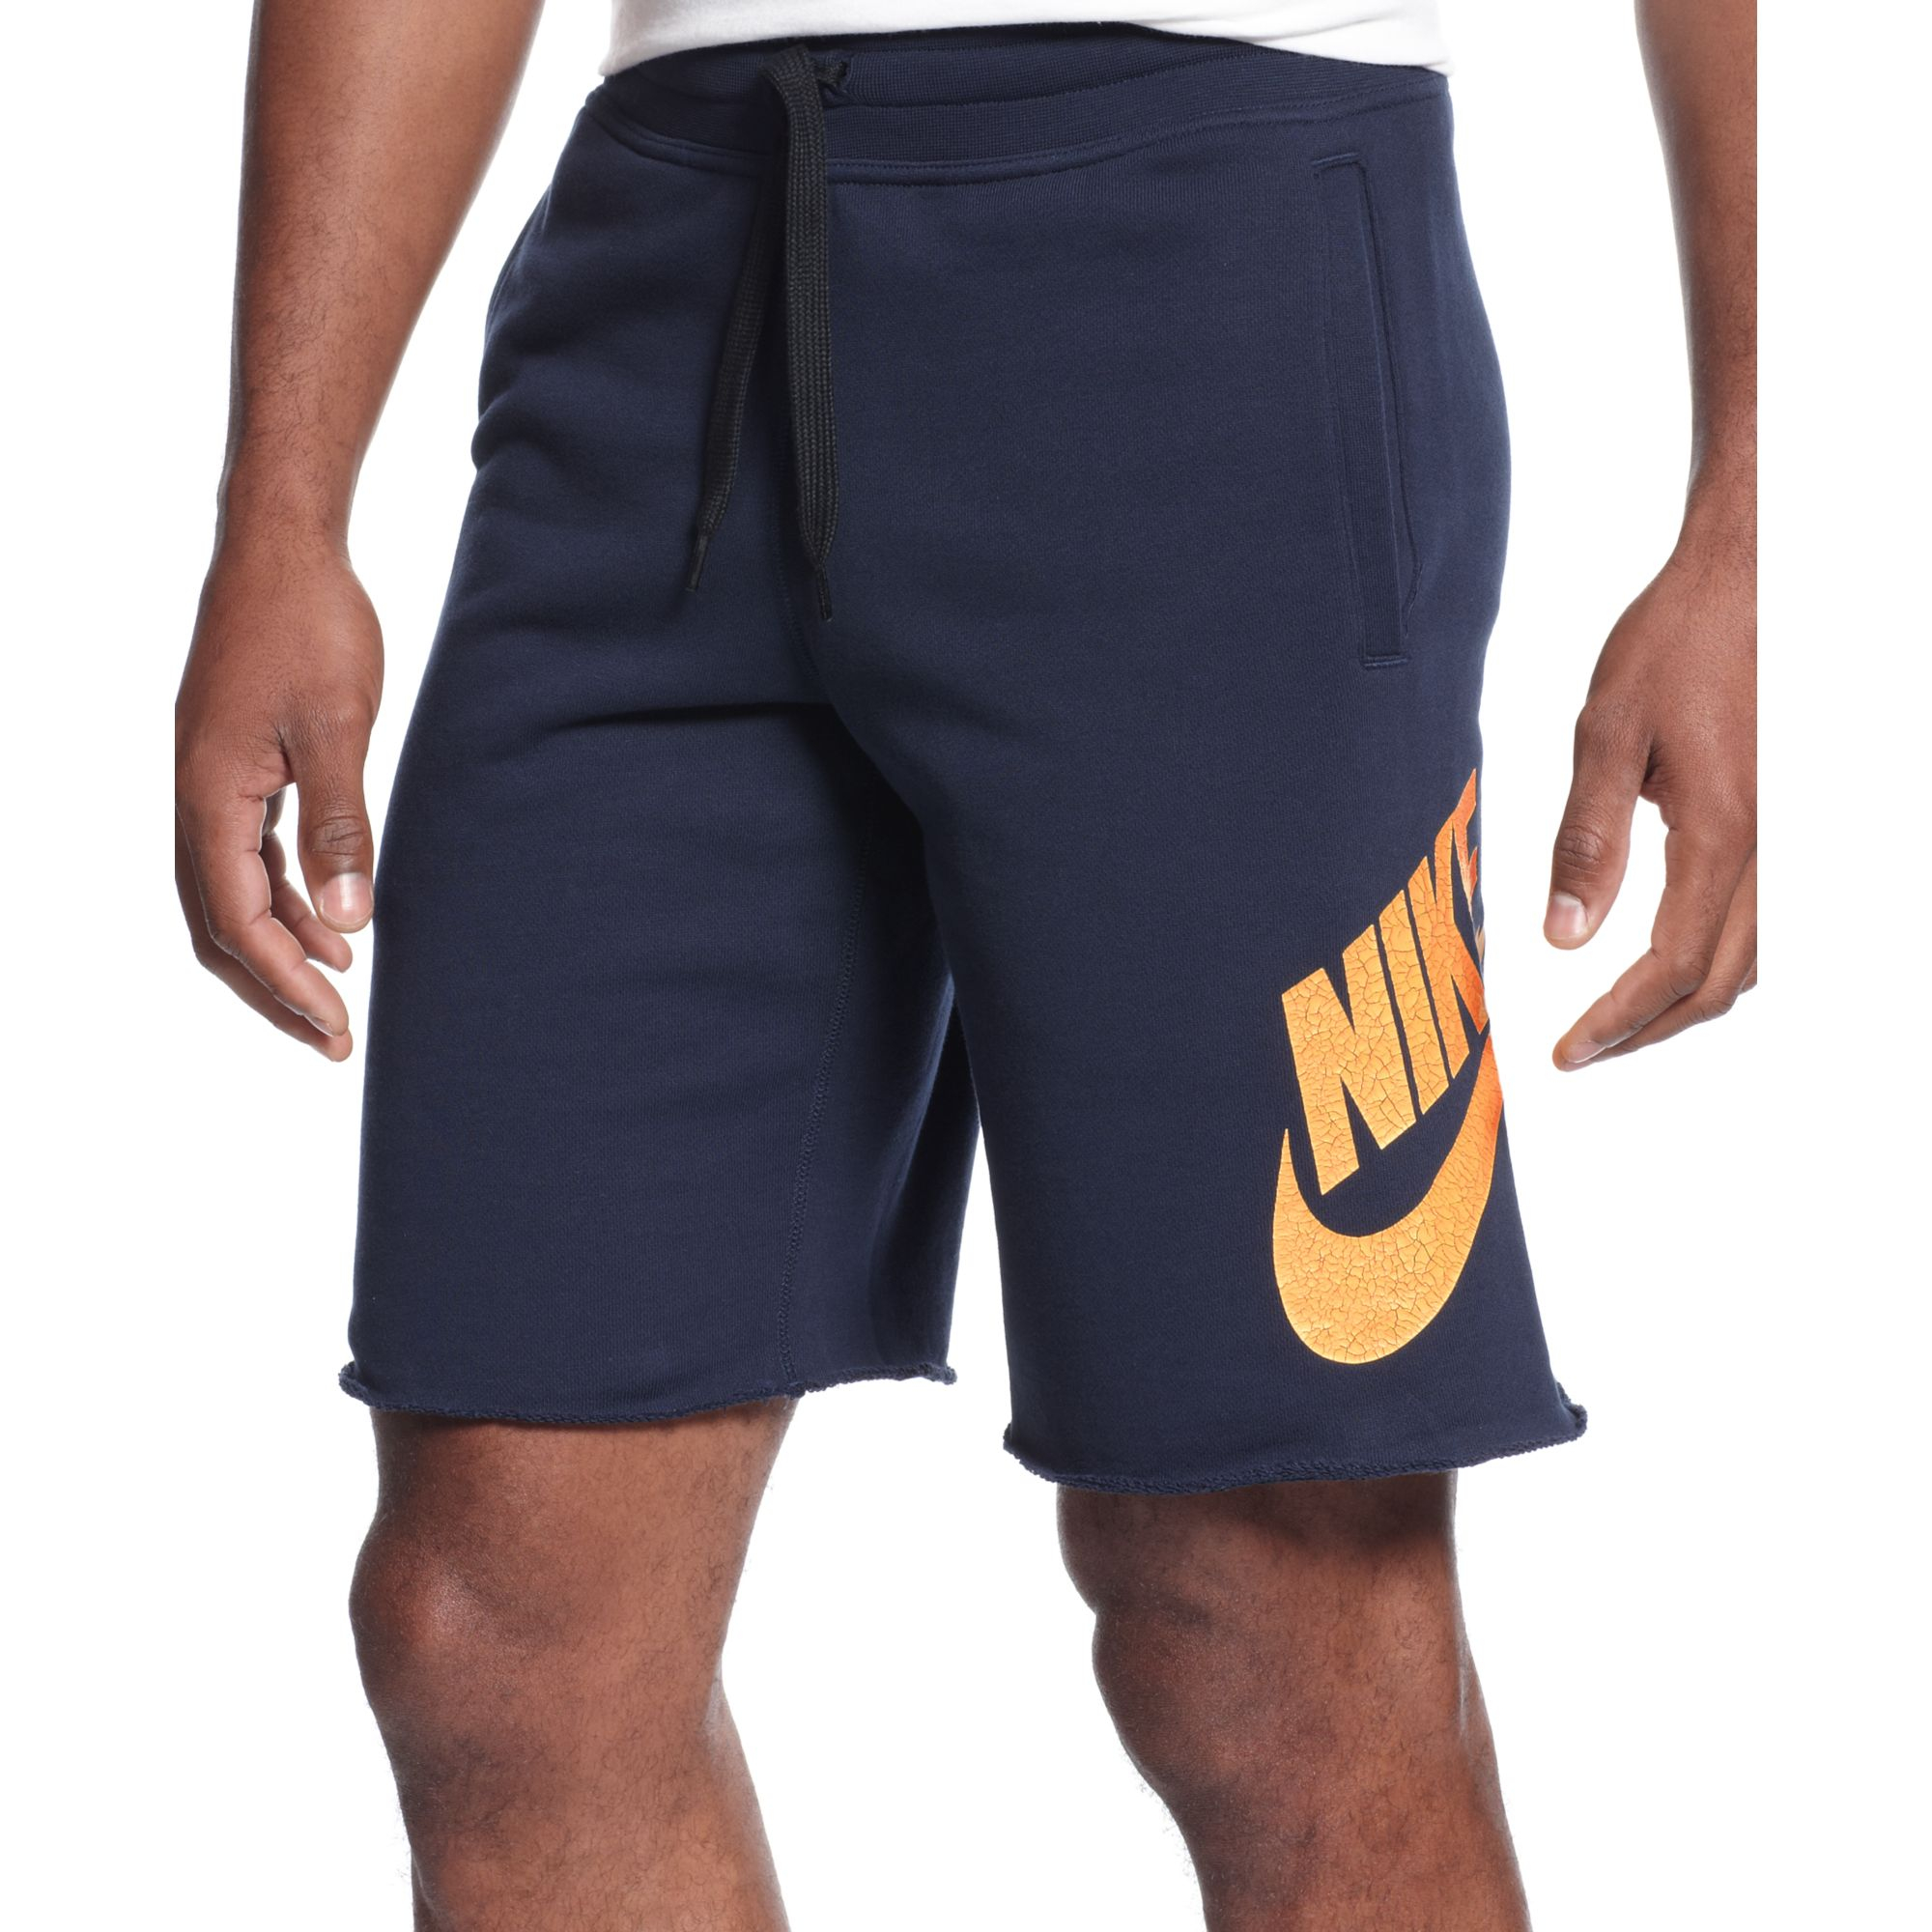 Nike Aw77 Alumni Shorts for Men - Lyst